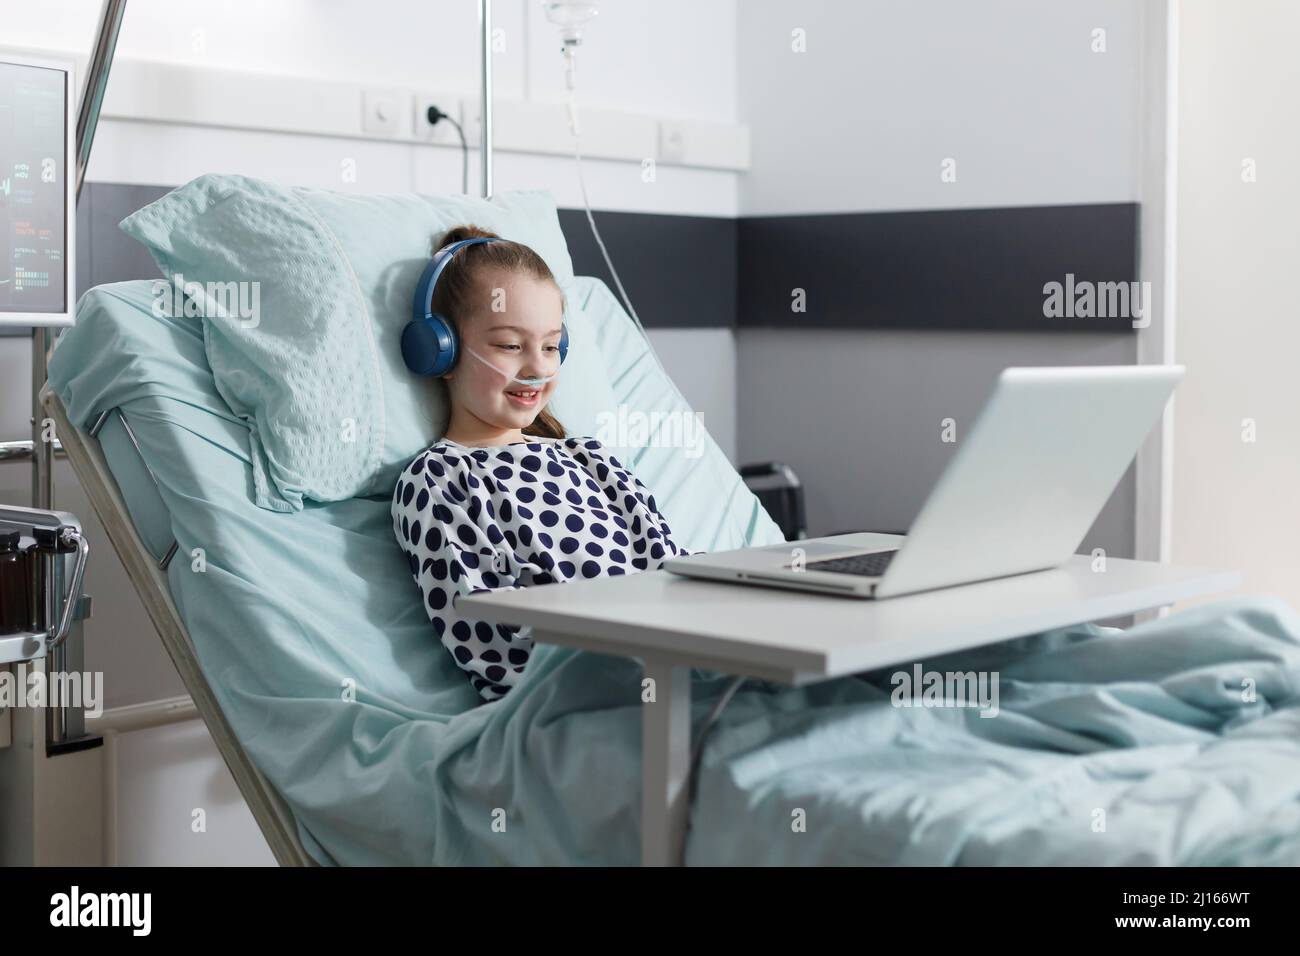 Humorous image of shrek in a hospital bed